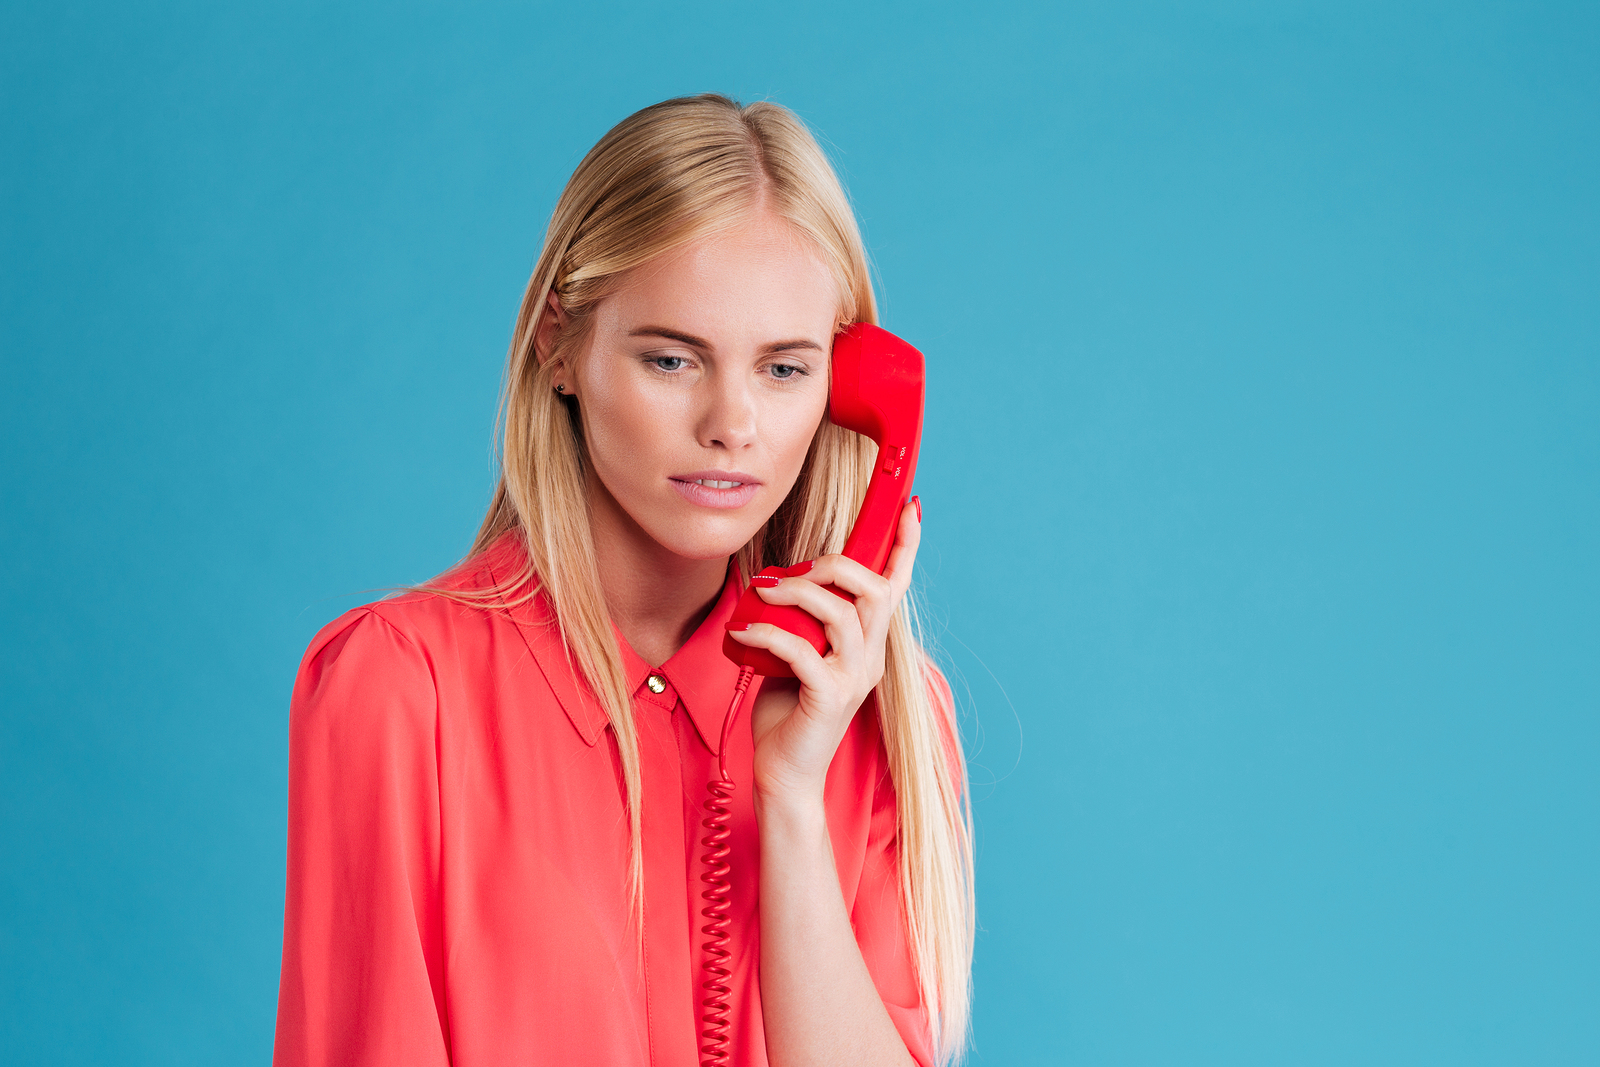 Sad blonde woman holding phone tube isolated on a blue background